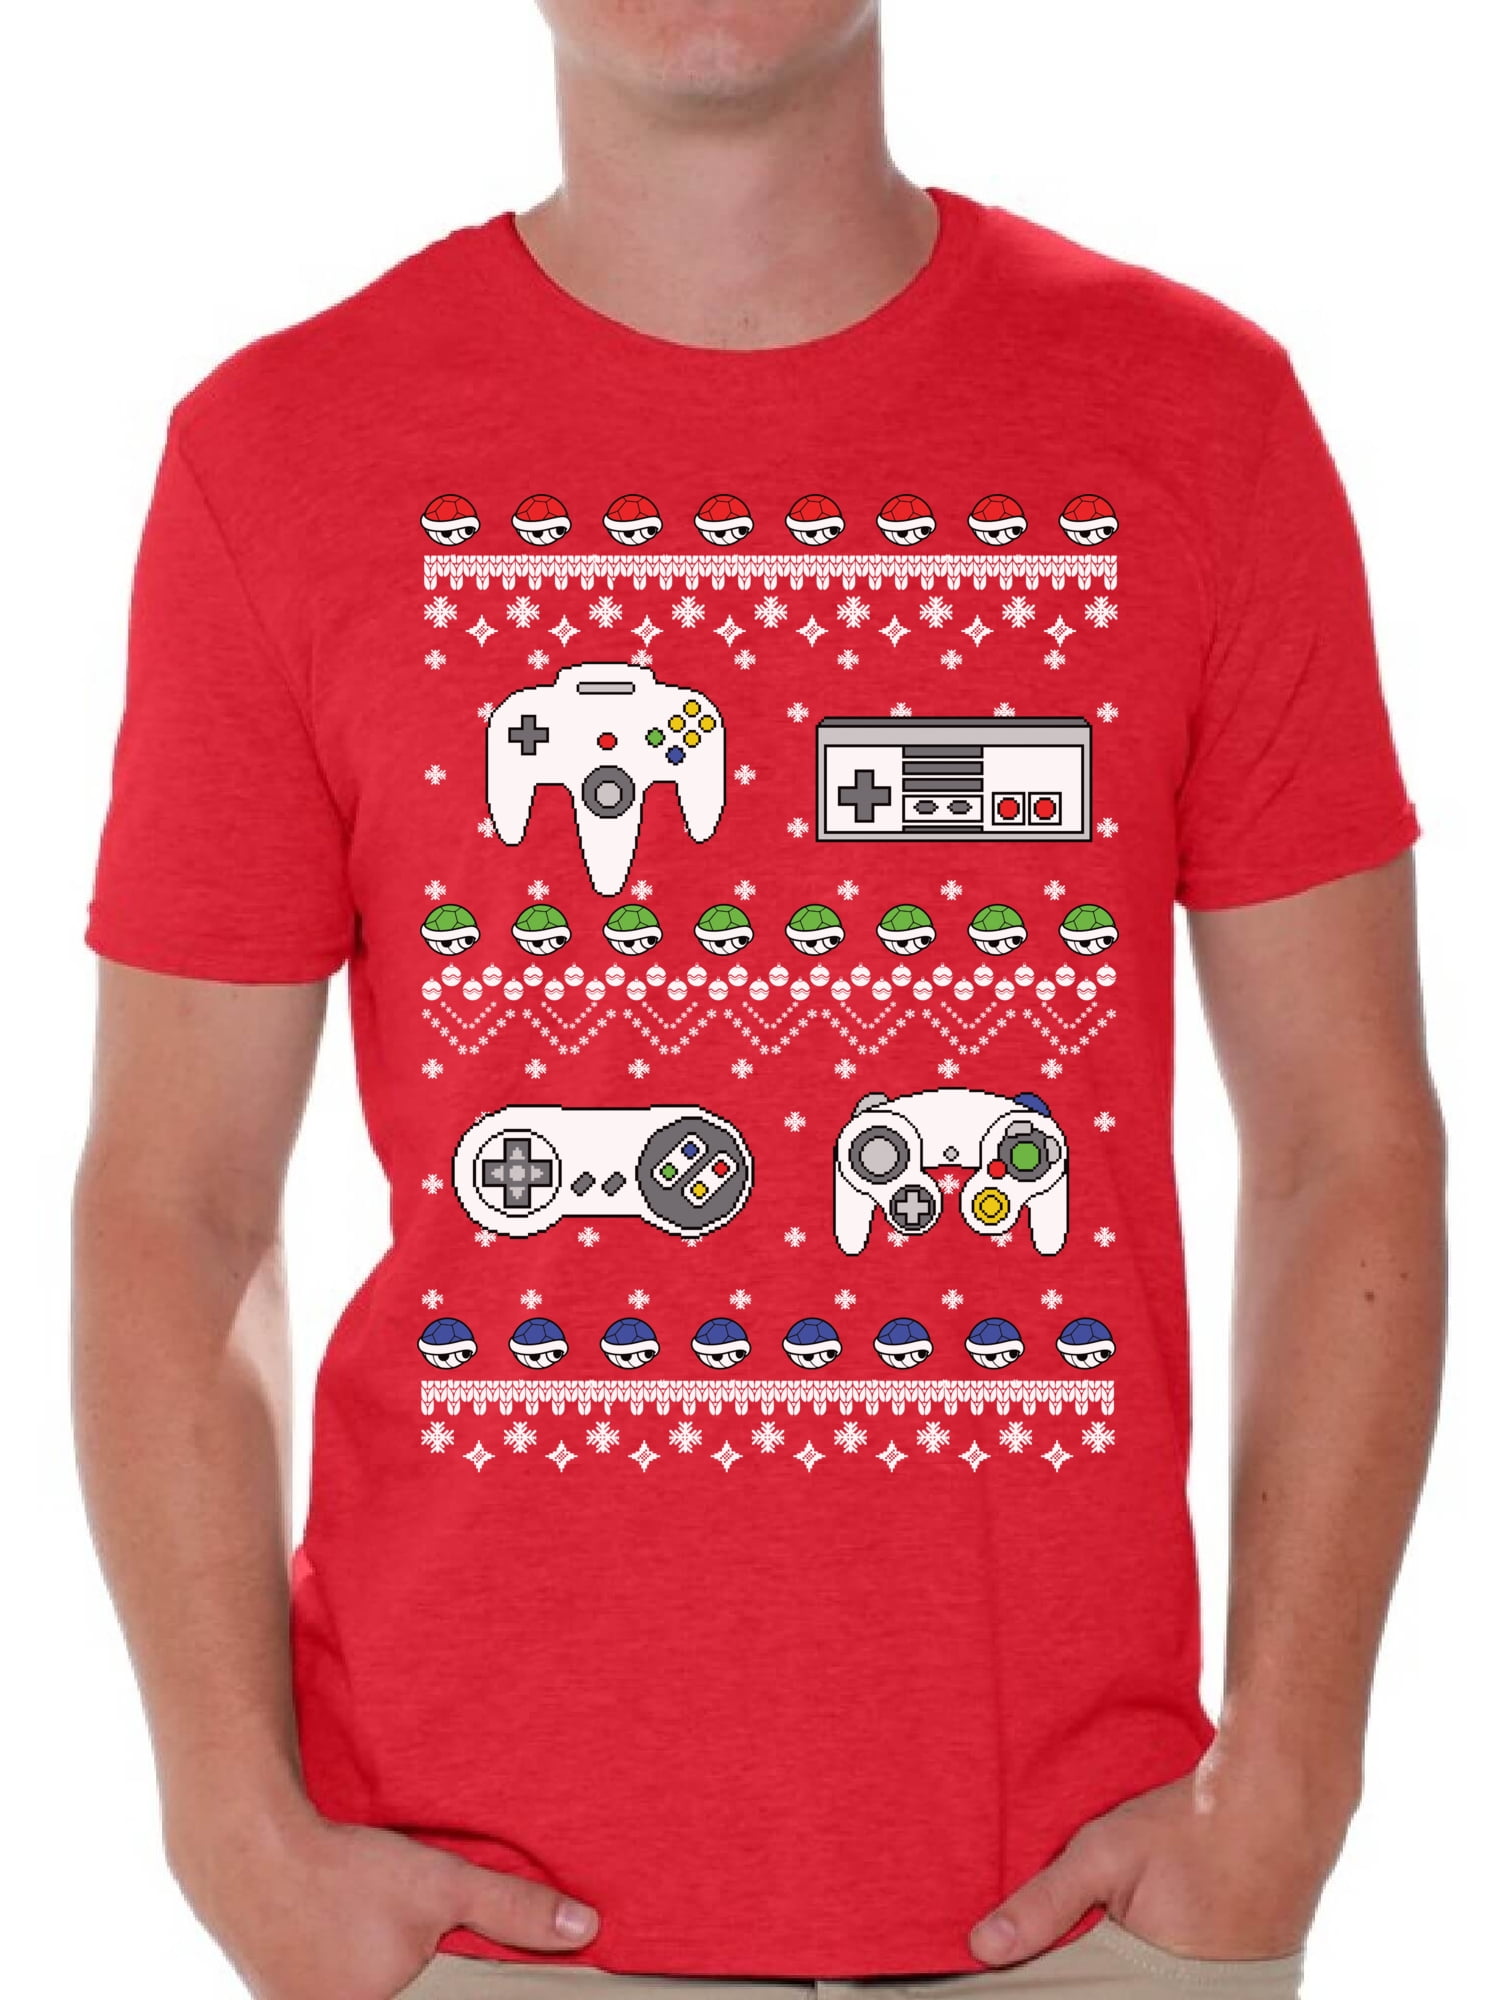 Awkward Styles Gamer Christmas Tshirt for Men Retro Gamer Shirt Funny Christmas  Shirts for Men Ugly Christmas T Shirt Geeky Christmas T-Shirt Xmas Party  Gifts for Him Nerdy Xmas Tshirt Xmas Gaming -